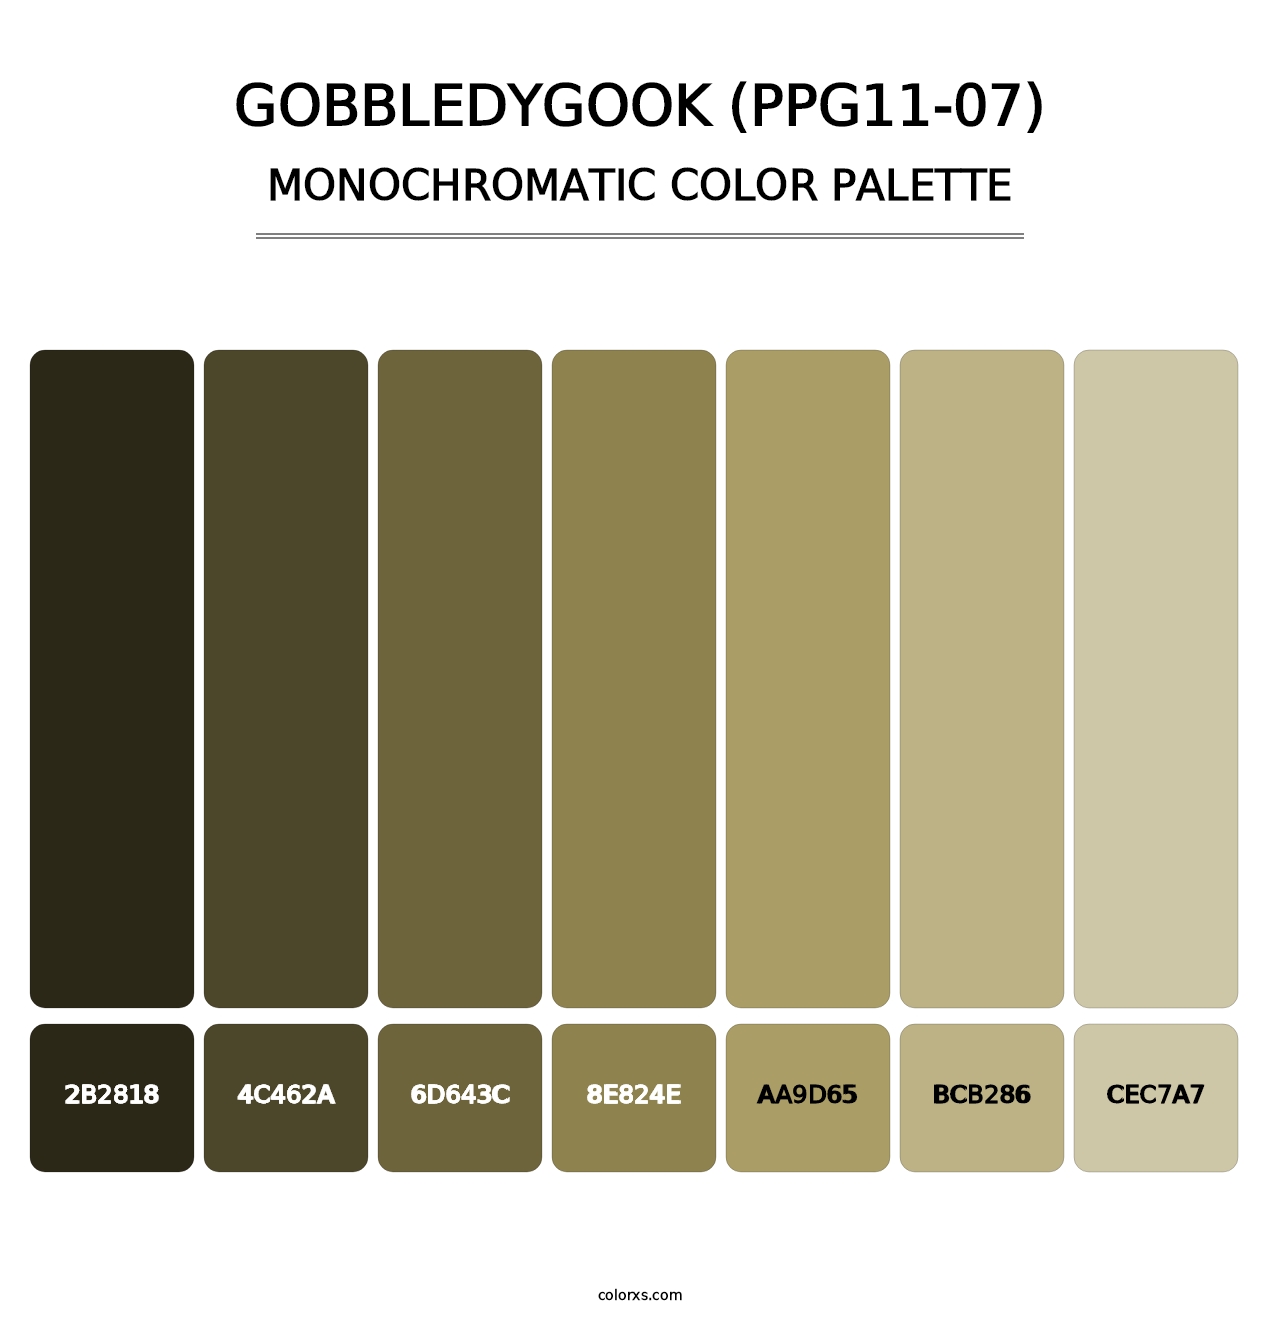 Gobbledygook (PPG11-07) - Monochromatic Color Palette